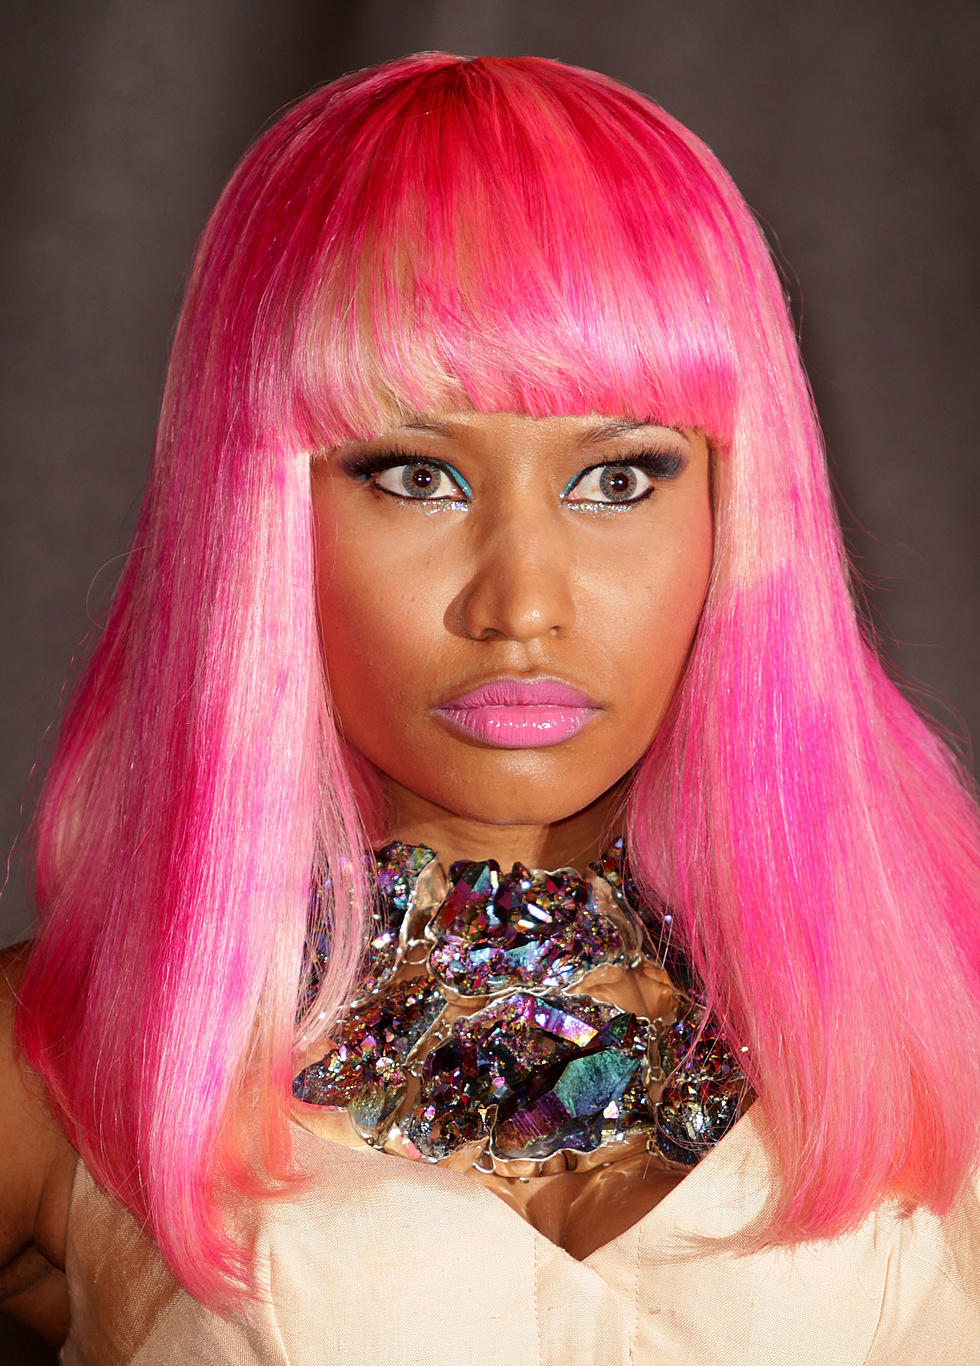 Nicki Minaj Is Finally Going To The Top!